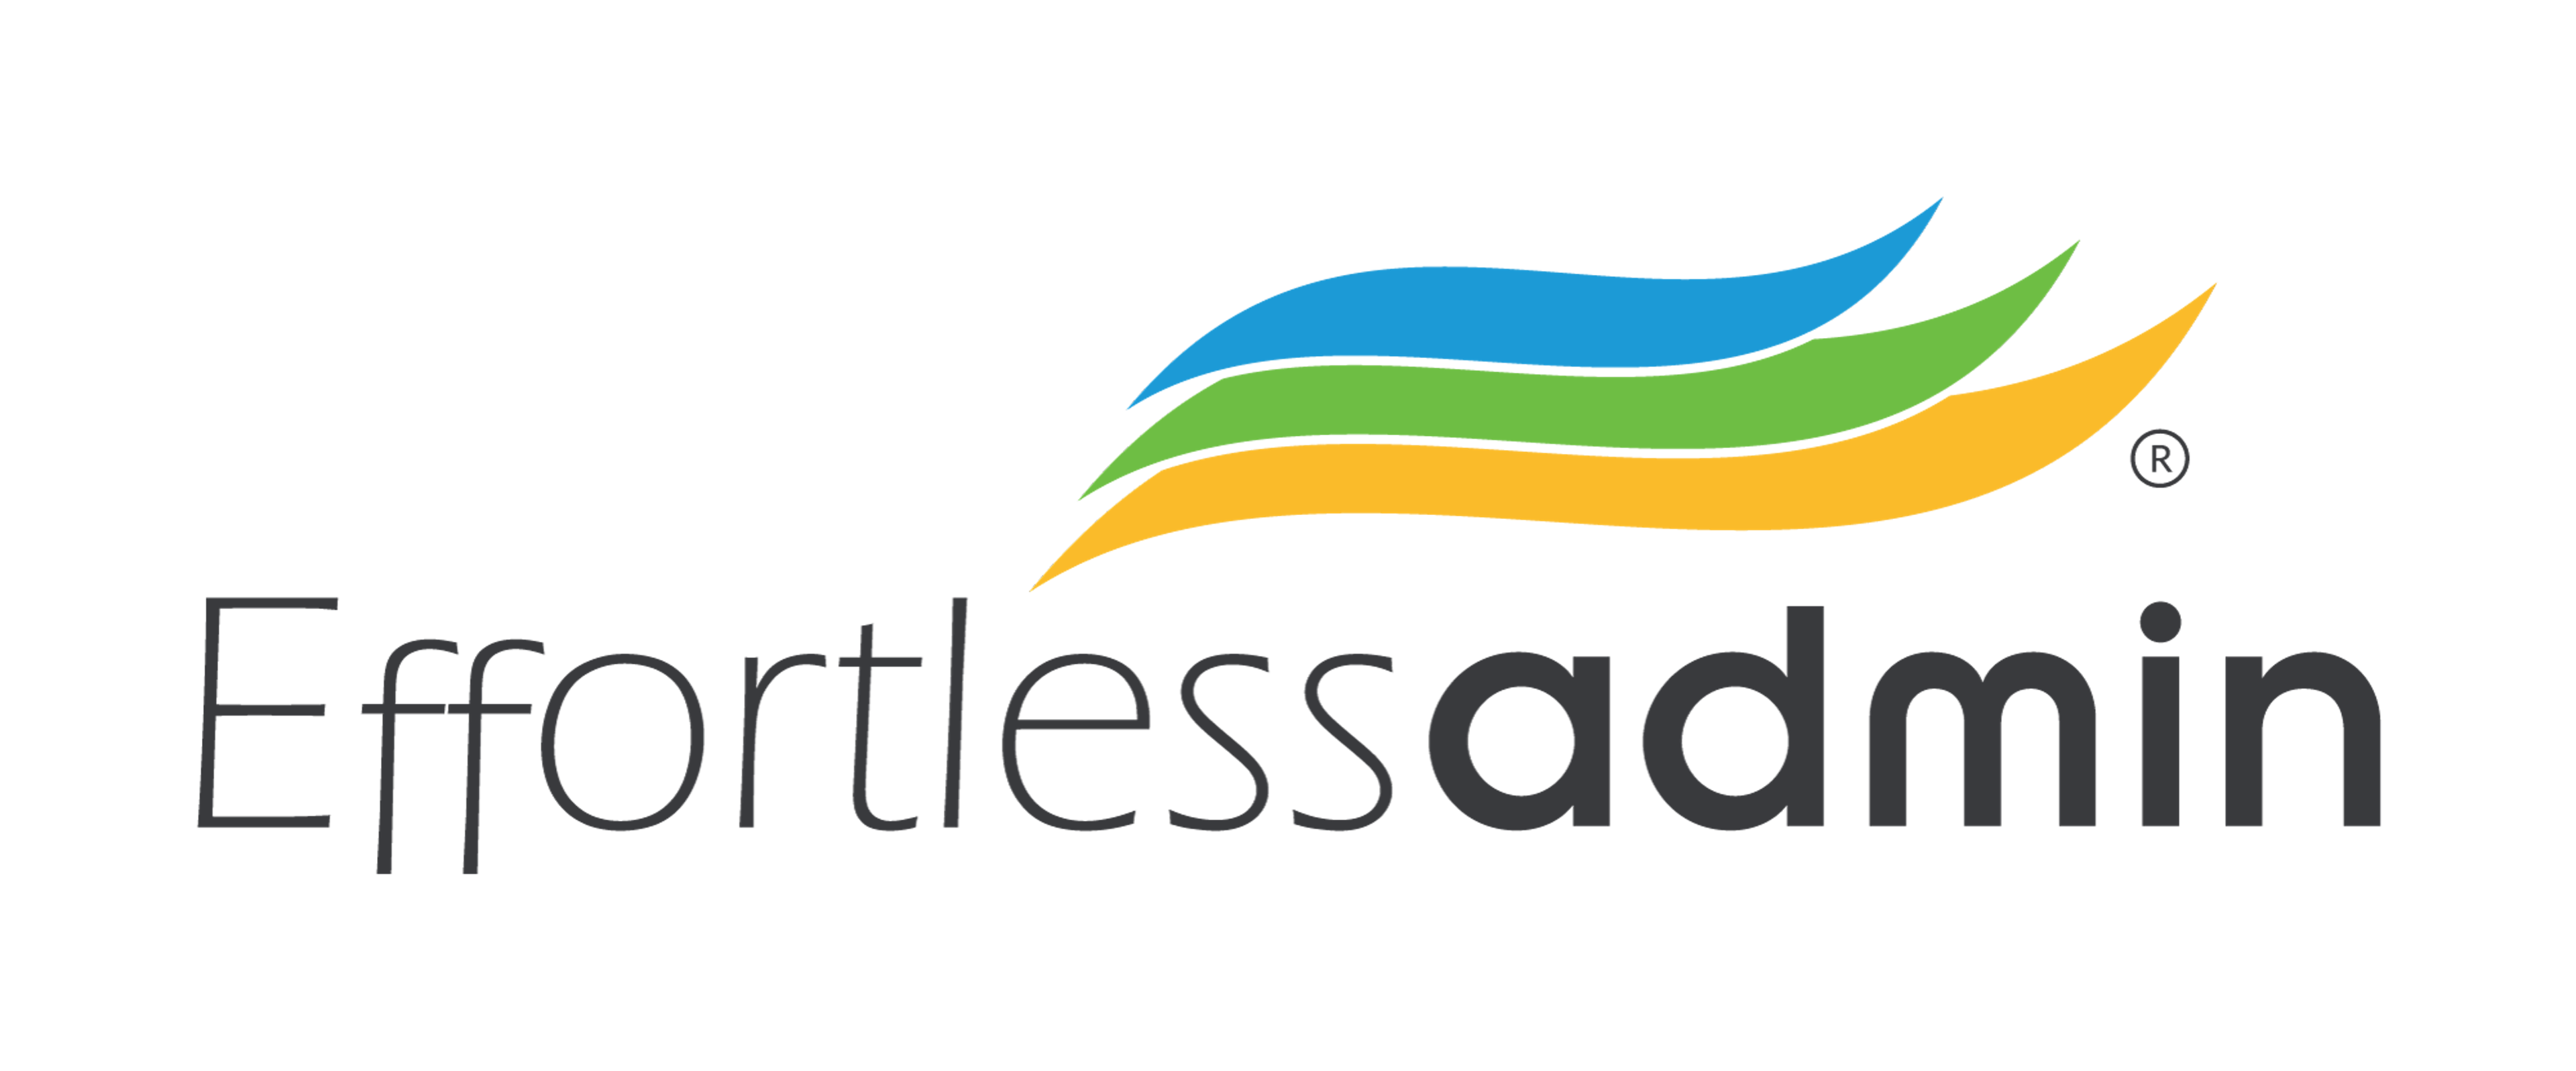 Effortless Admin Logo